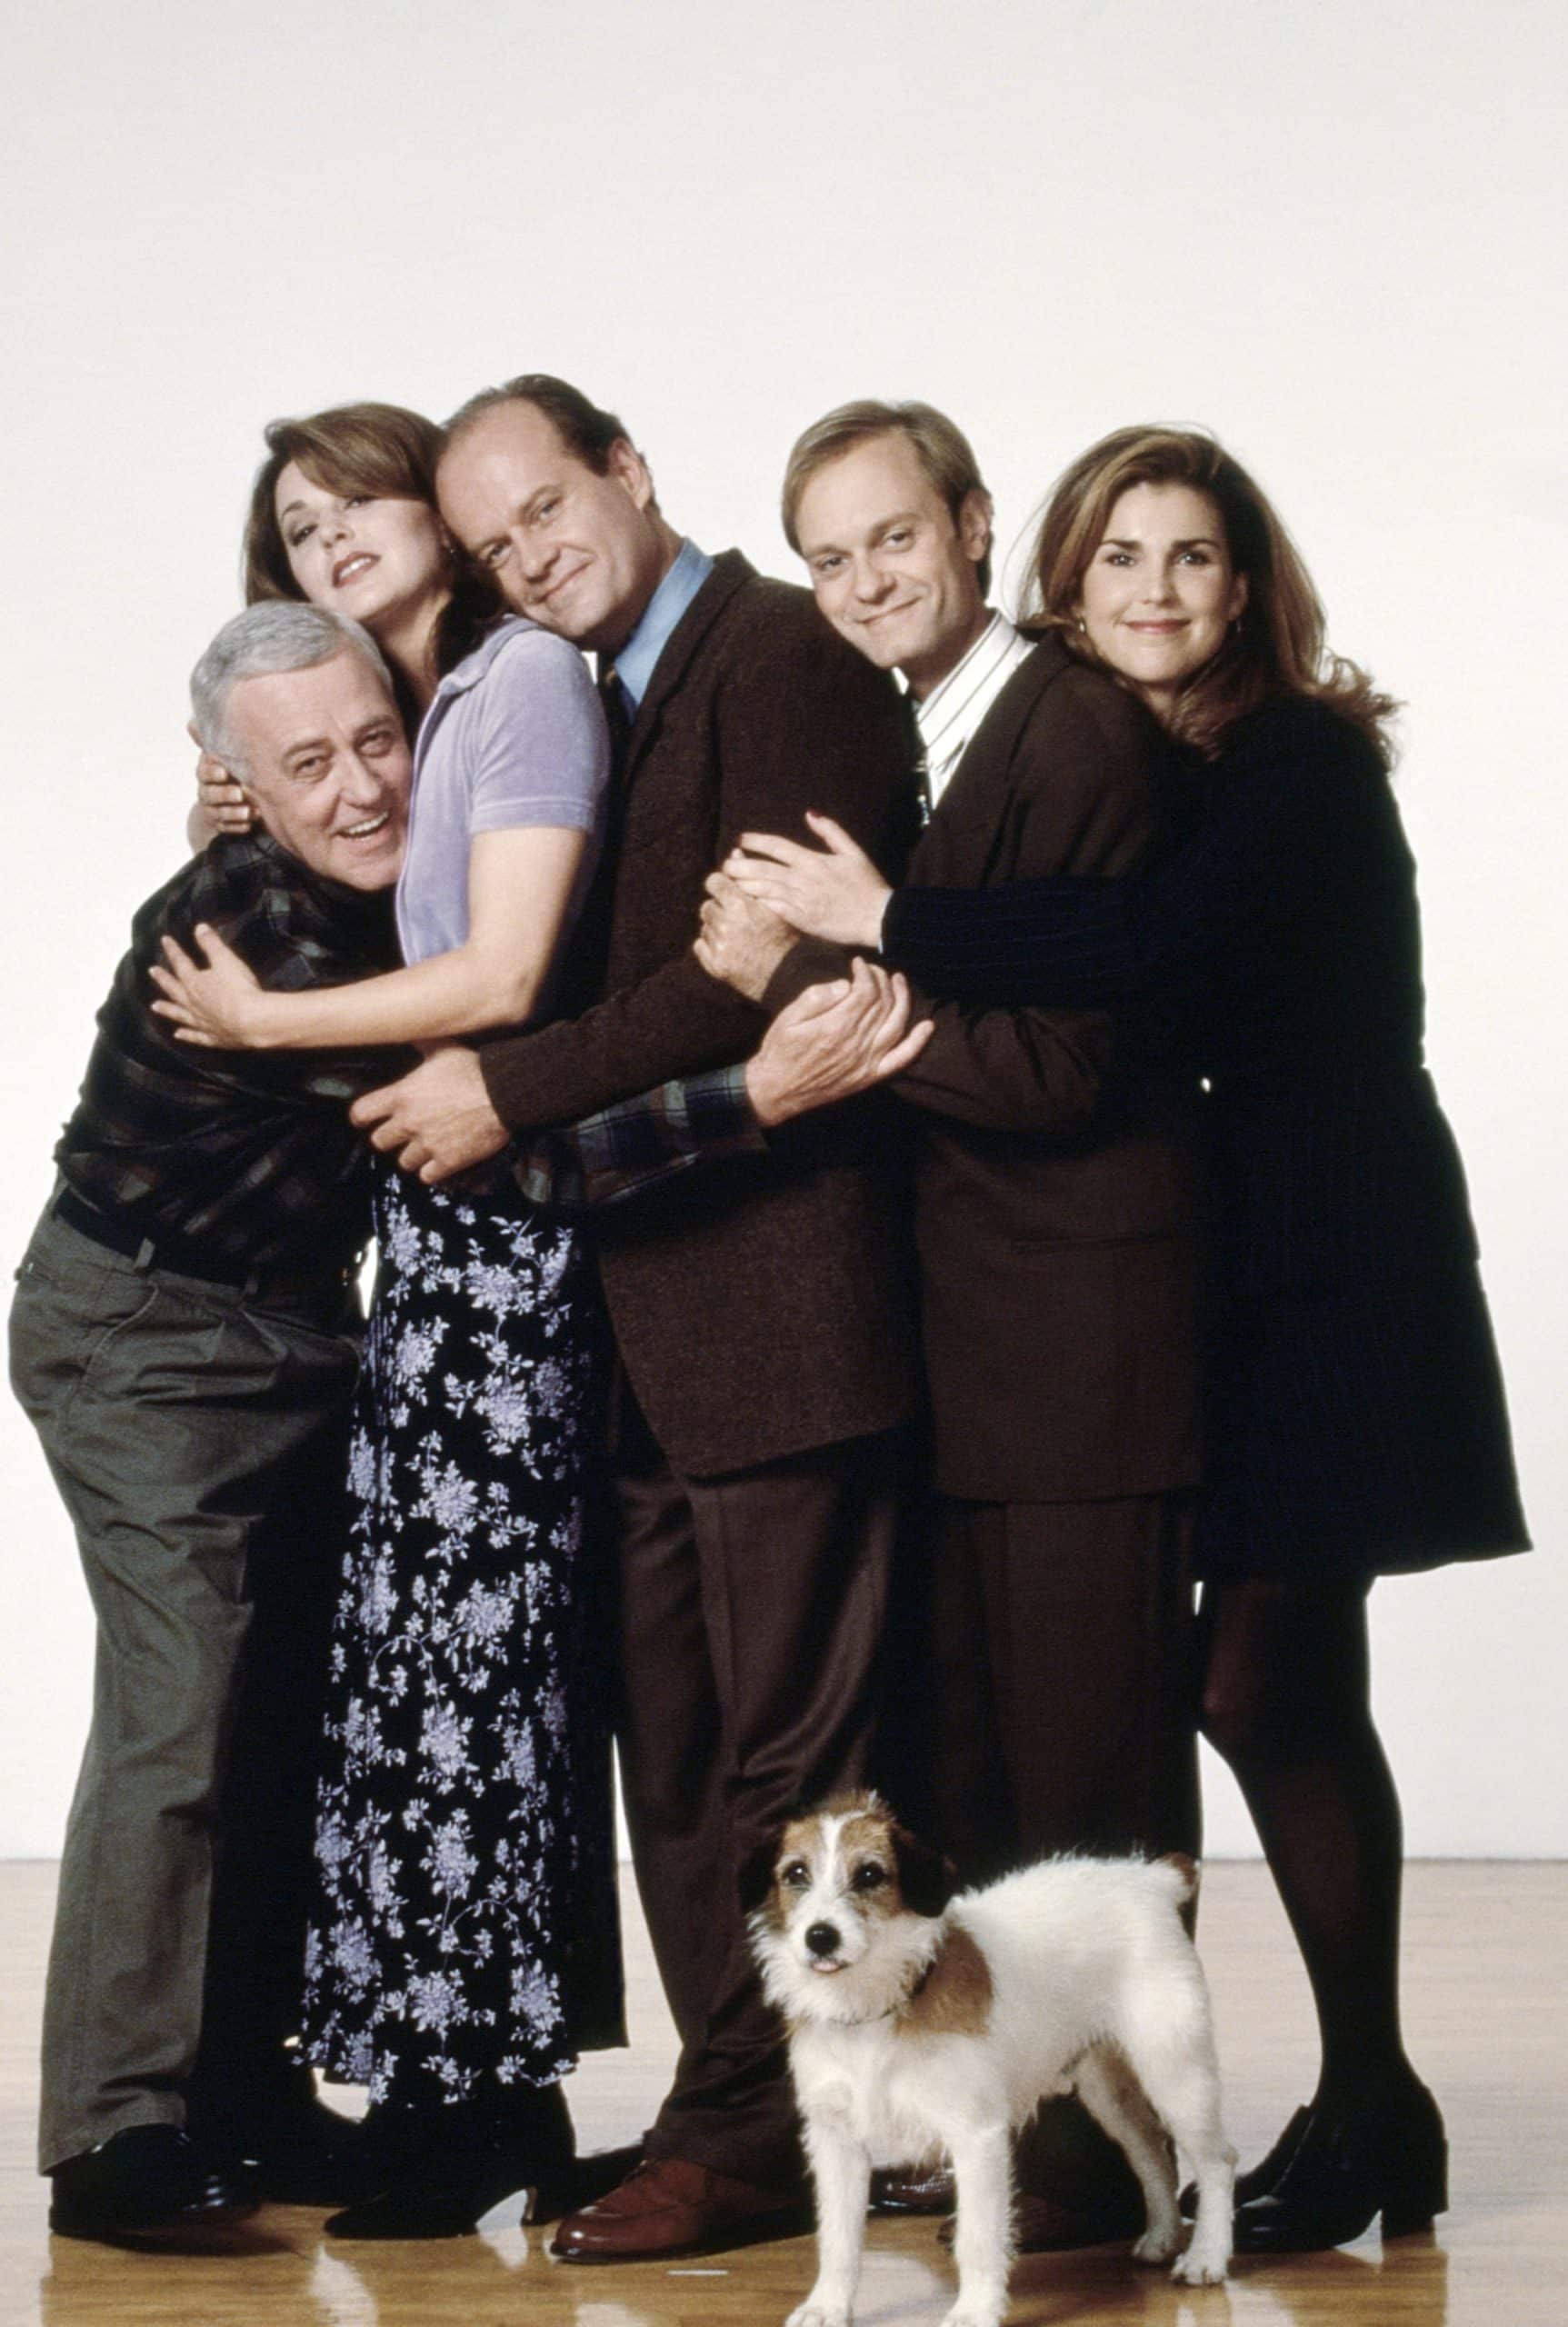 FRASIER, from left: John Mahoney, Jane Leeves, Kelsey Grammer, David Hyde Pierce, Peri Gilpin, Eddie the Dog, cast shot, 1993-2004